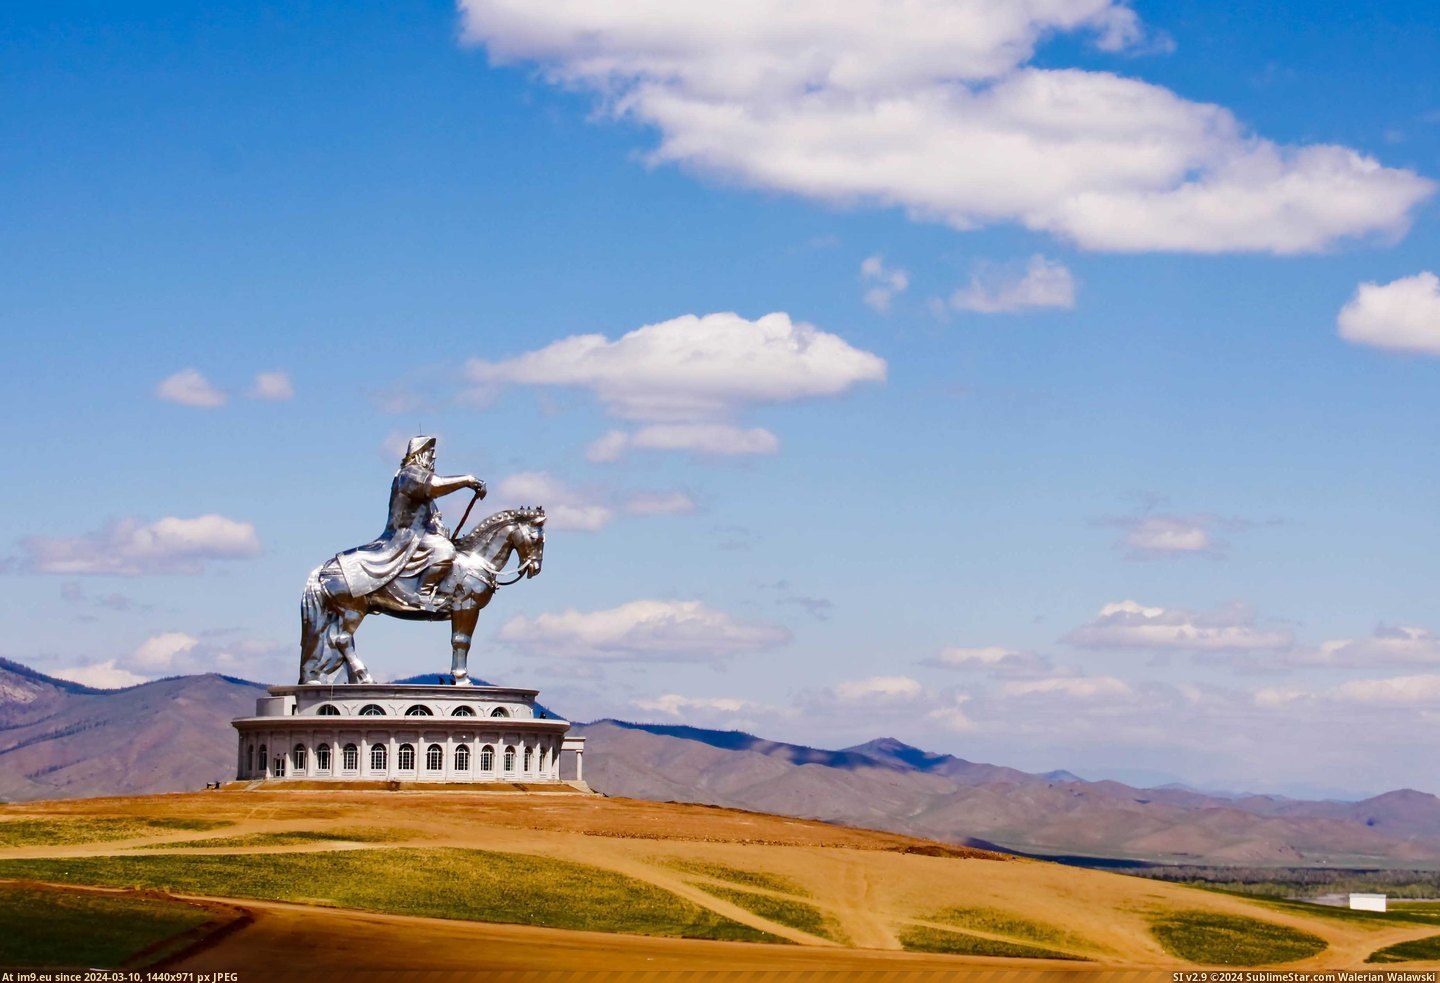 #Statue #Khan #Mongolia [Pics] Statue of Genghis Khan in Mongolia Pic. (Image of album My r/PICS favs))